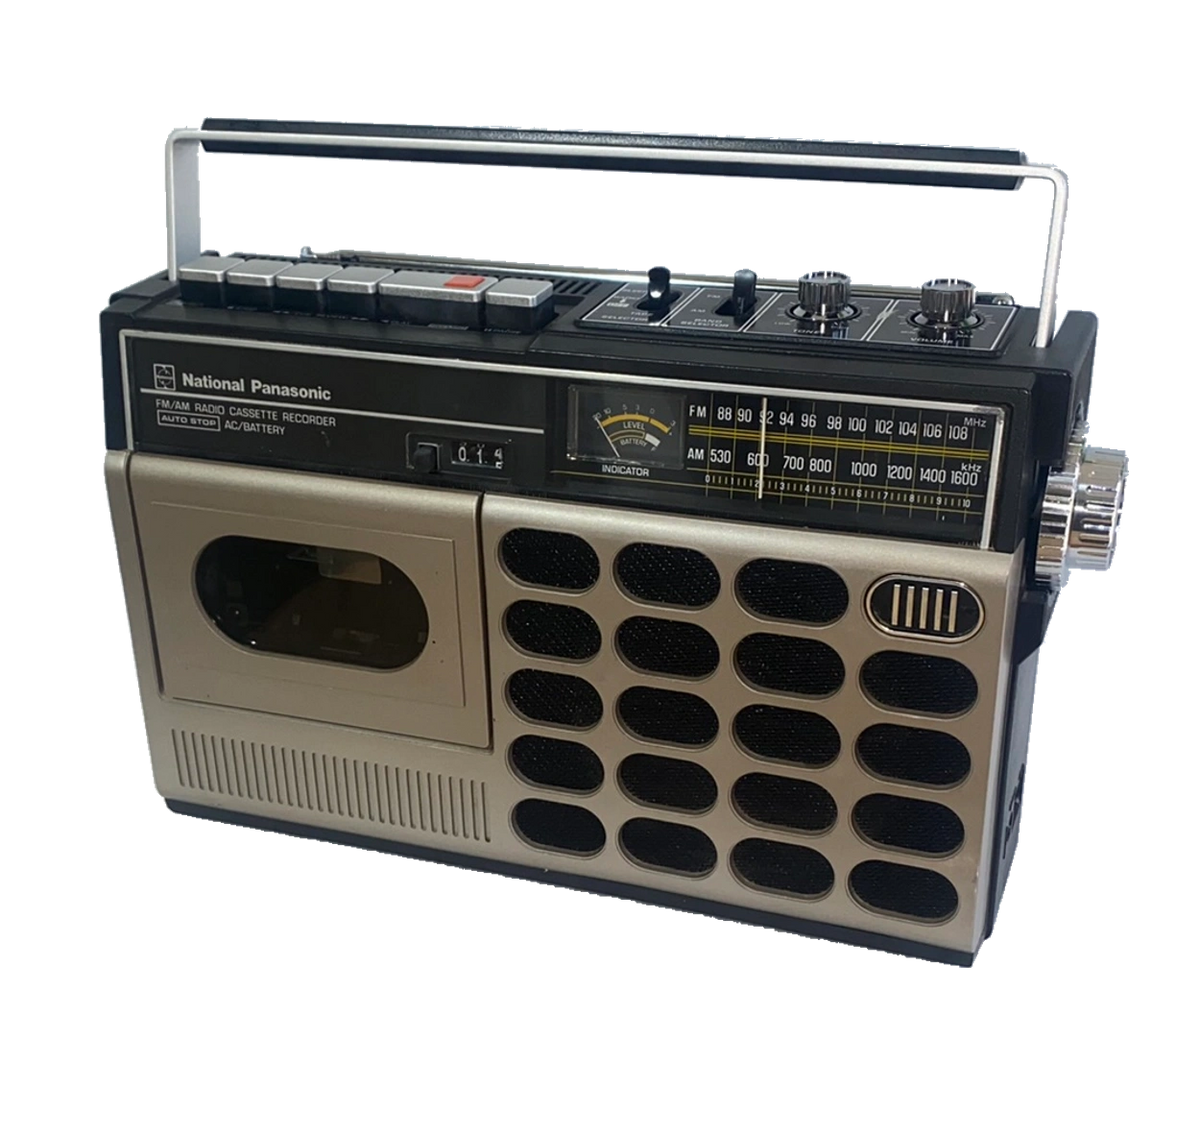 National Panasonic RQ-544AS Radio Cassette Recorder AM/FM 1977